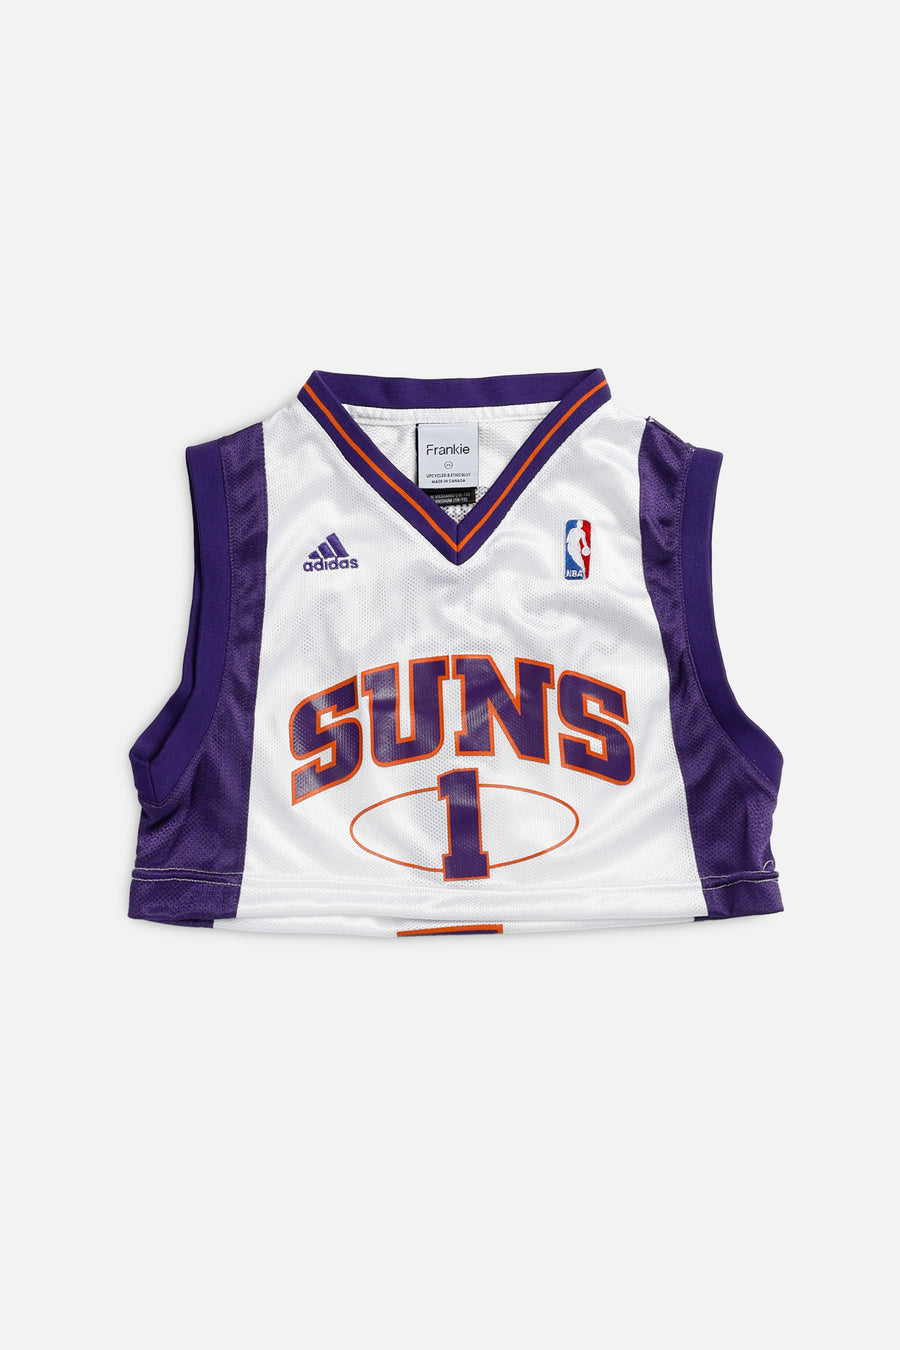 Rework Pheonix Suns NBA Crop Jersey